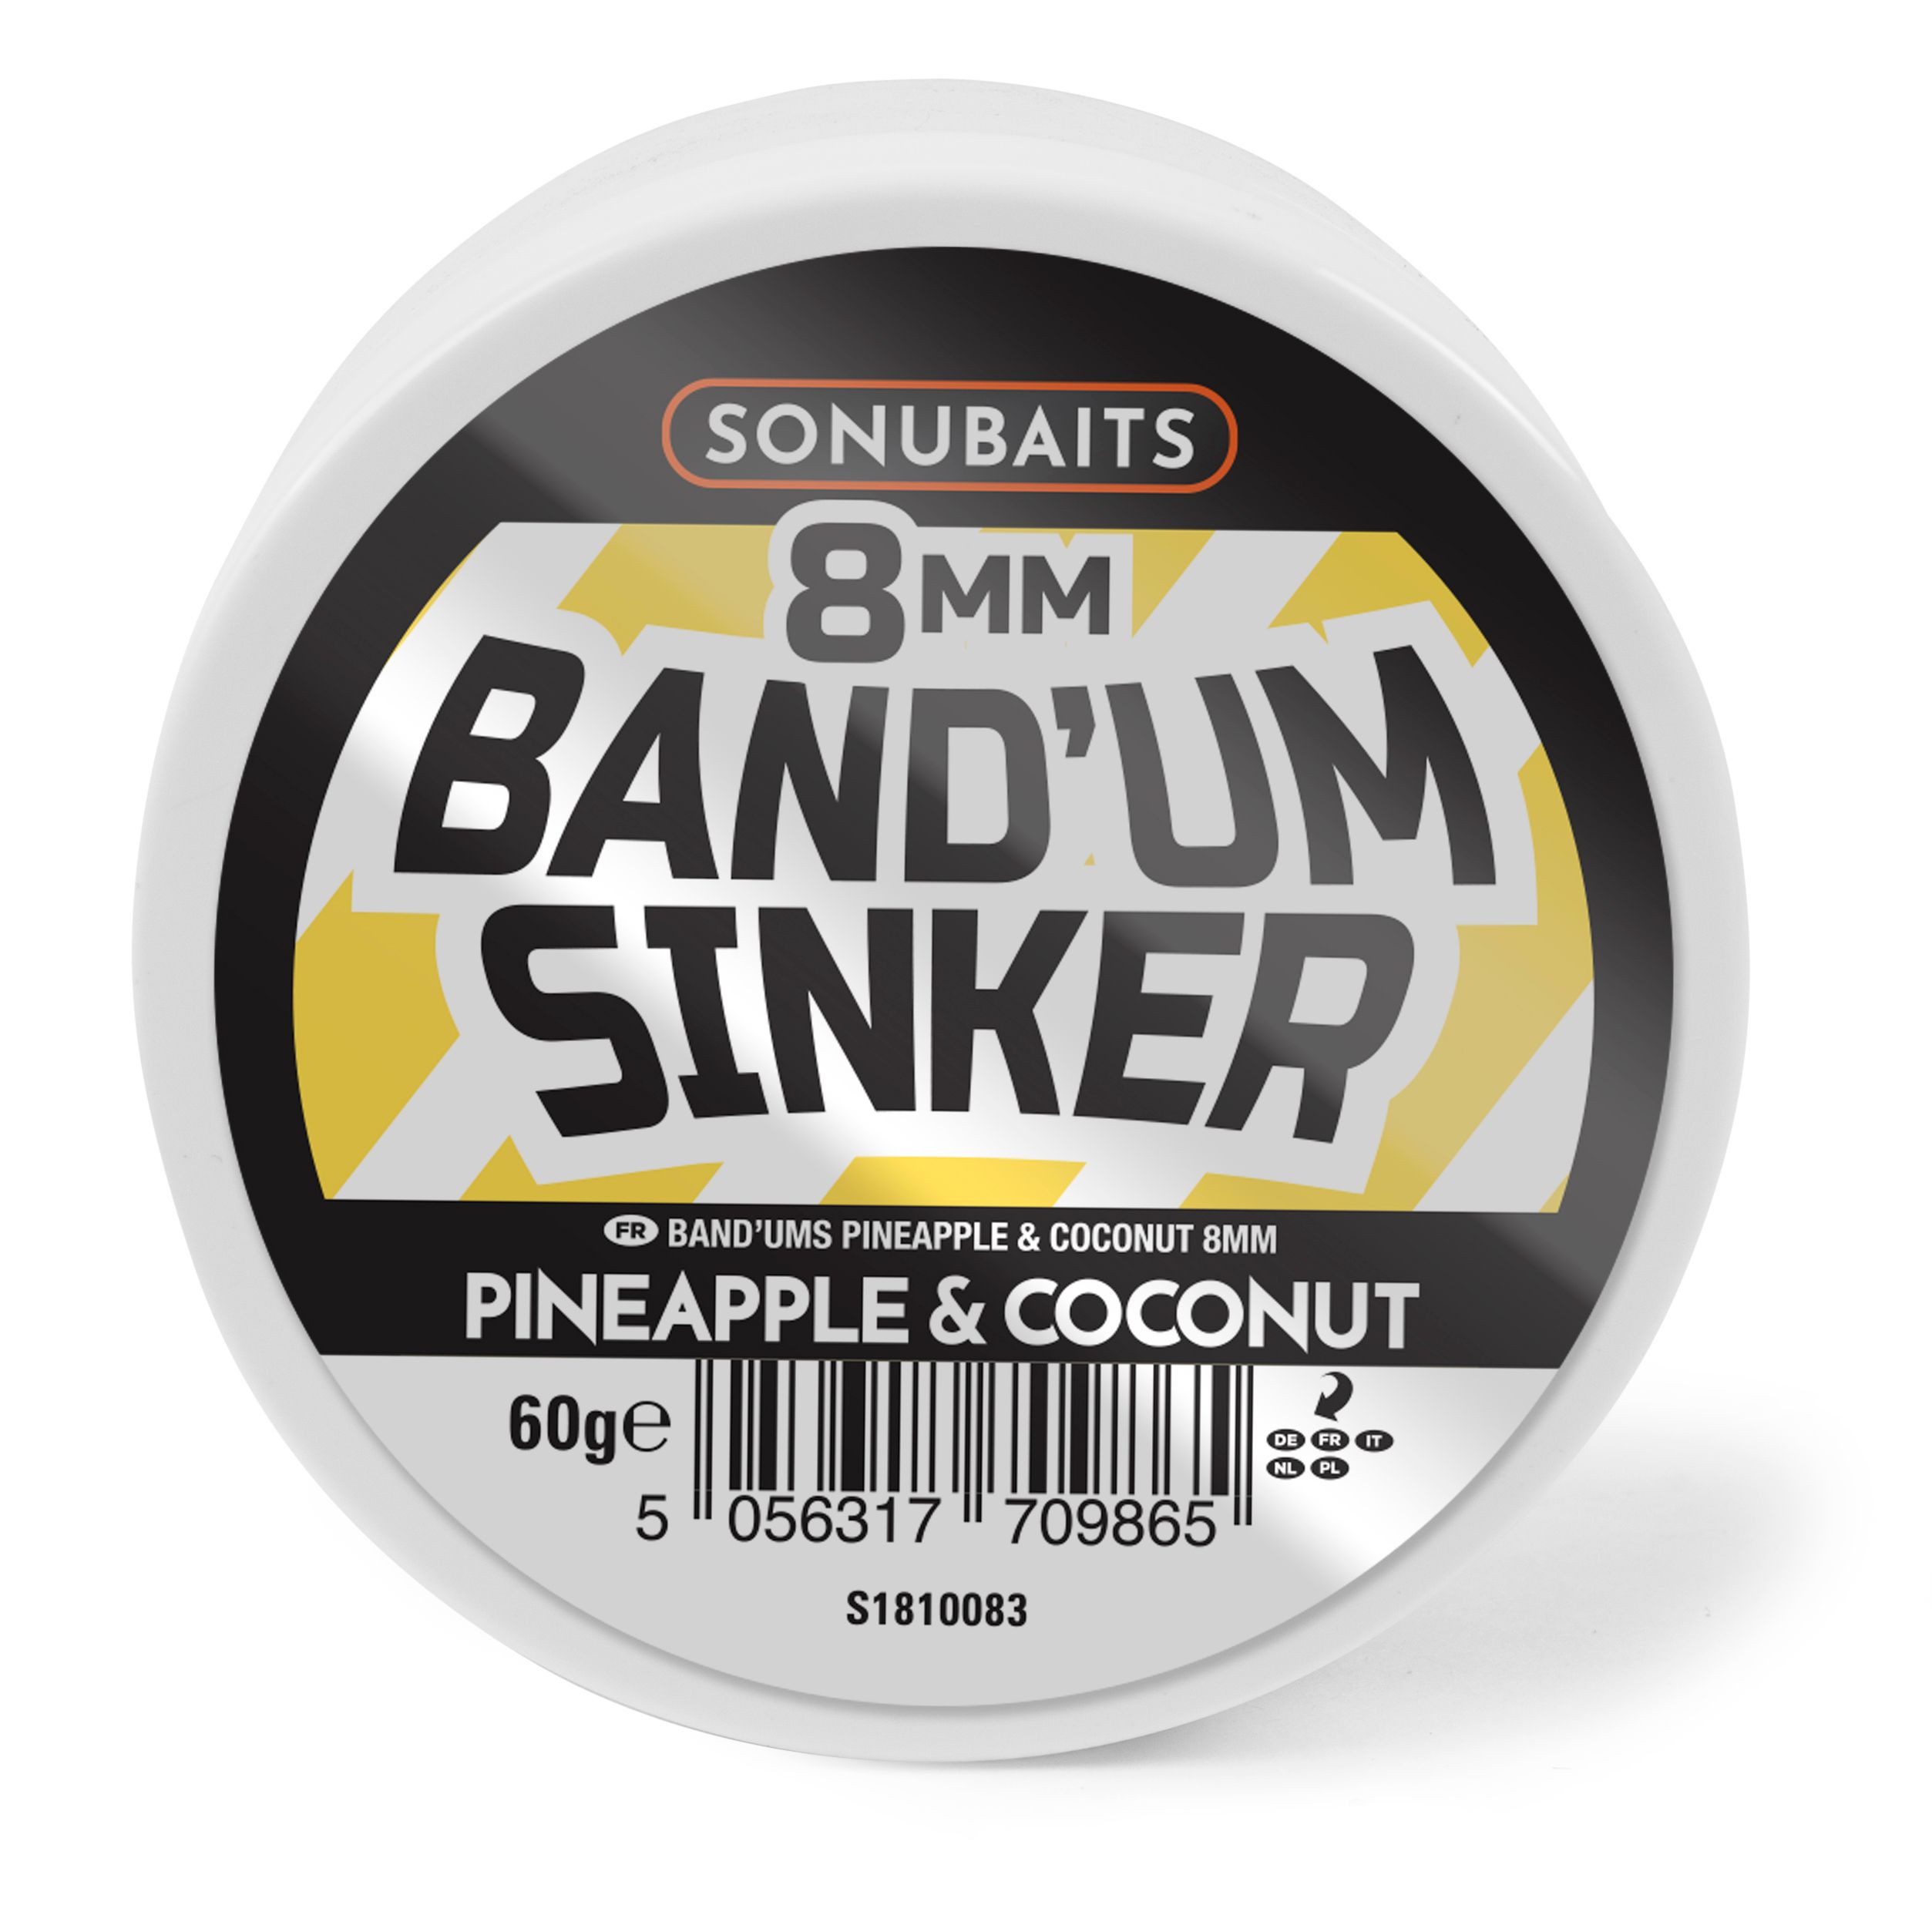 Sonubaits Band'um Sinker Boilies para Pez Blanco 8mm - Pineapple & Coconut